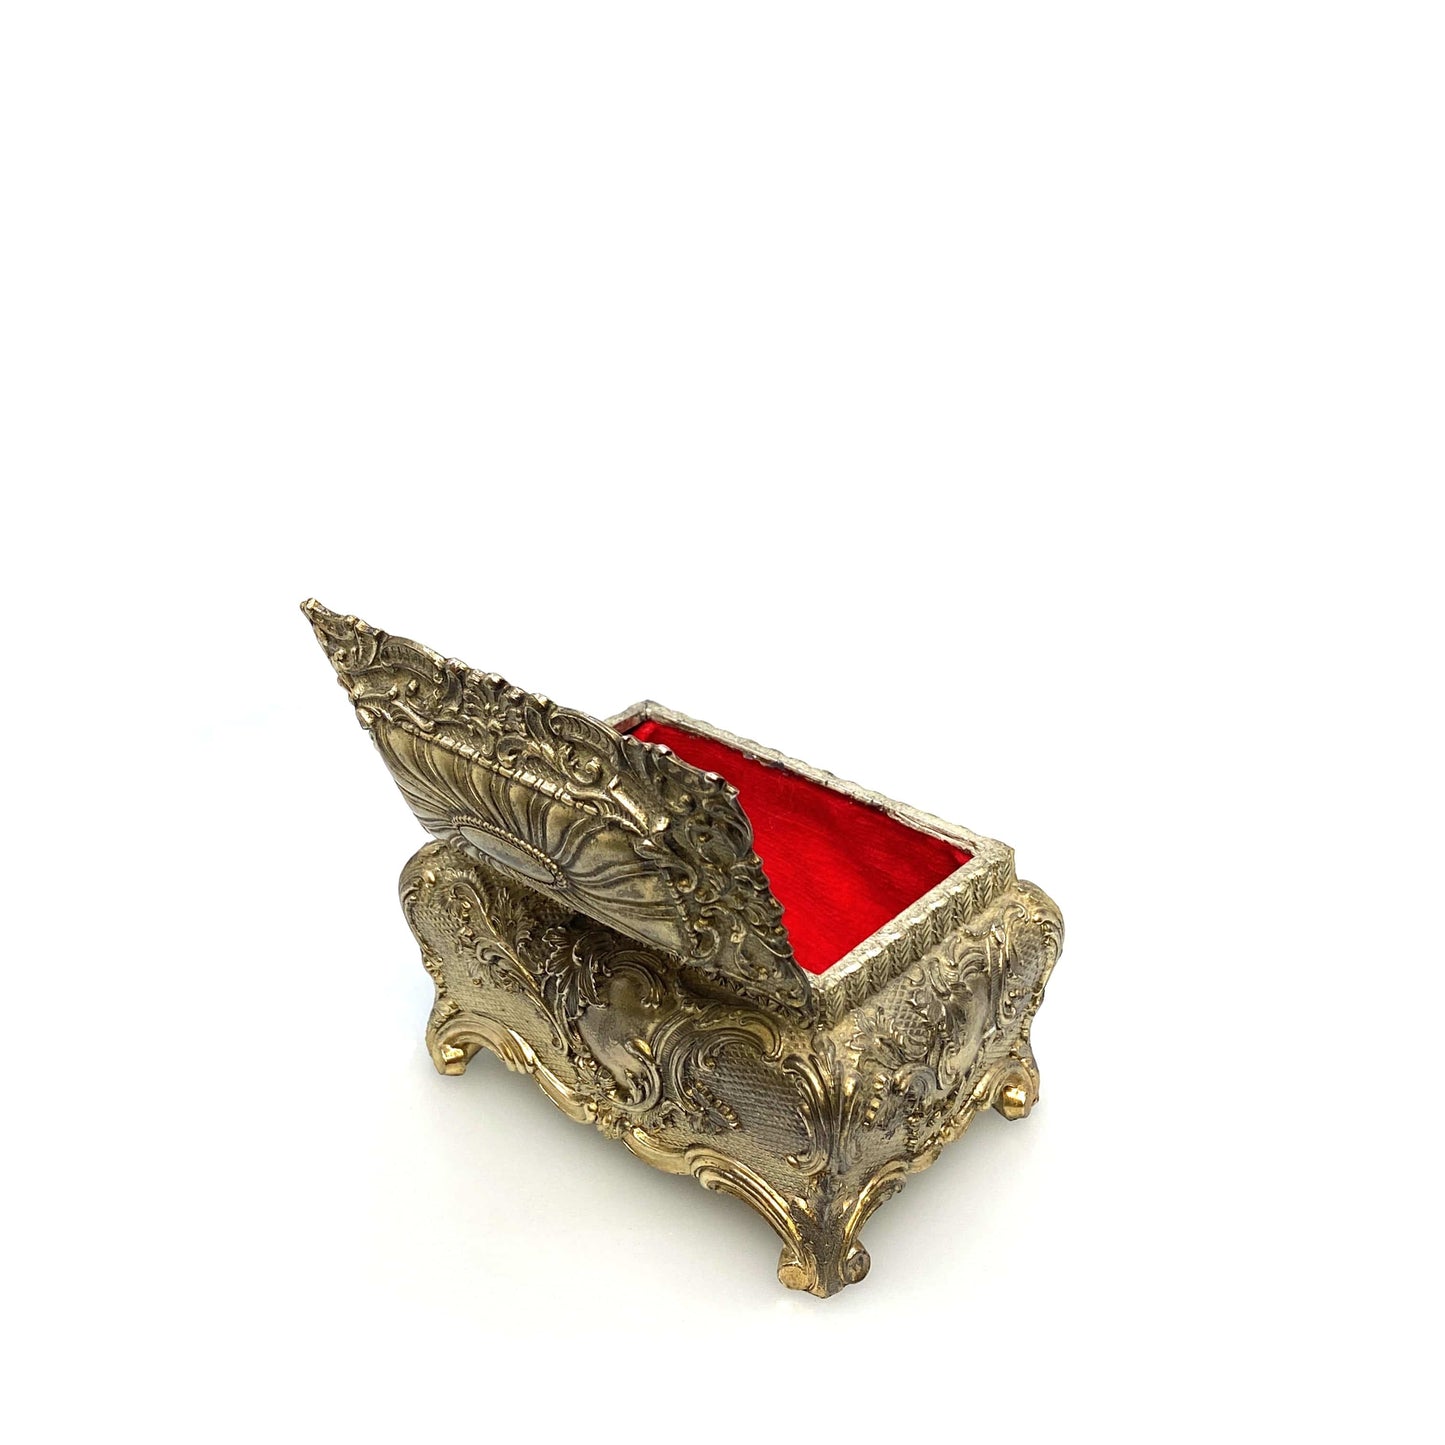 Vintage Ornate Gold Metal Casket Jewelry Box Art Floral Trinket Footed Vanity Accessory